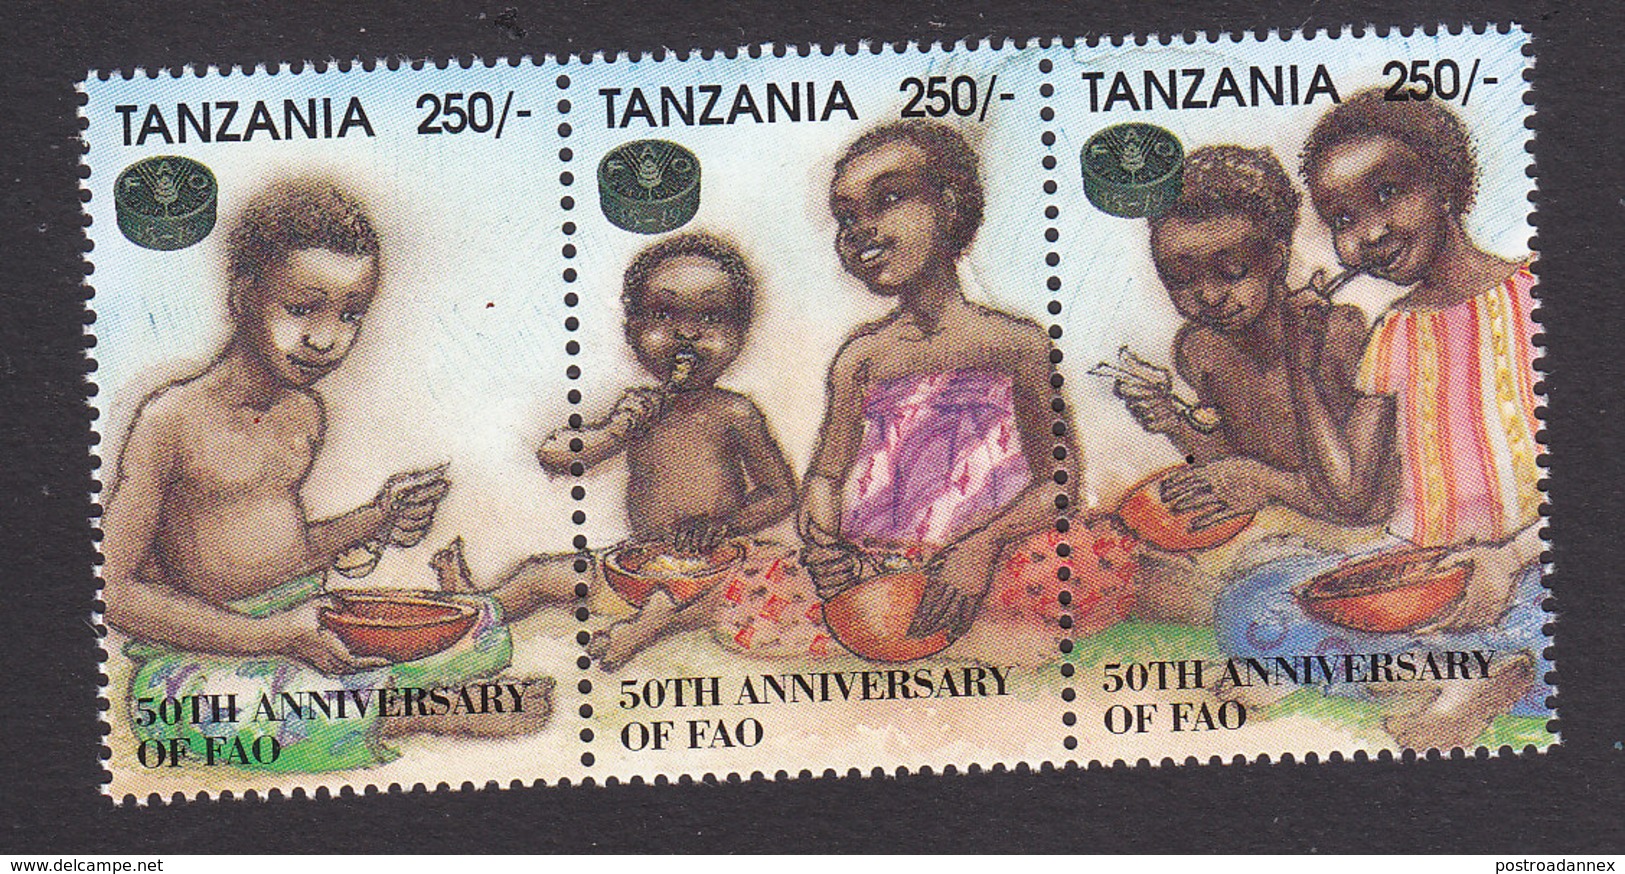 Tanzania, Scott #1344, Mint Never Hinged, FAO, 50th Anniversary, Issued 1995 - Tanzania (1964-...)